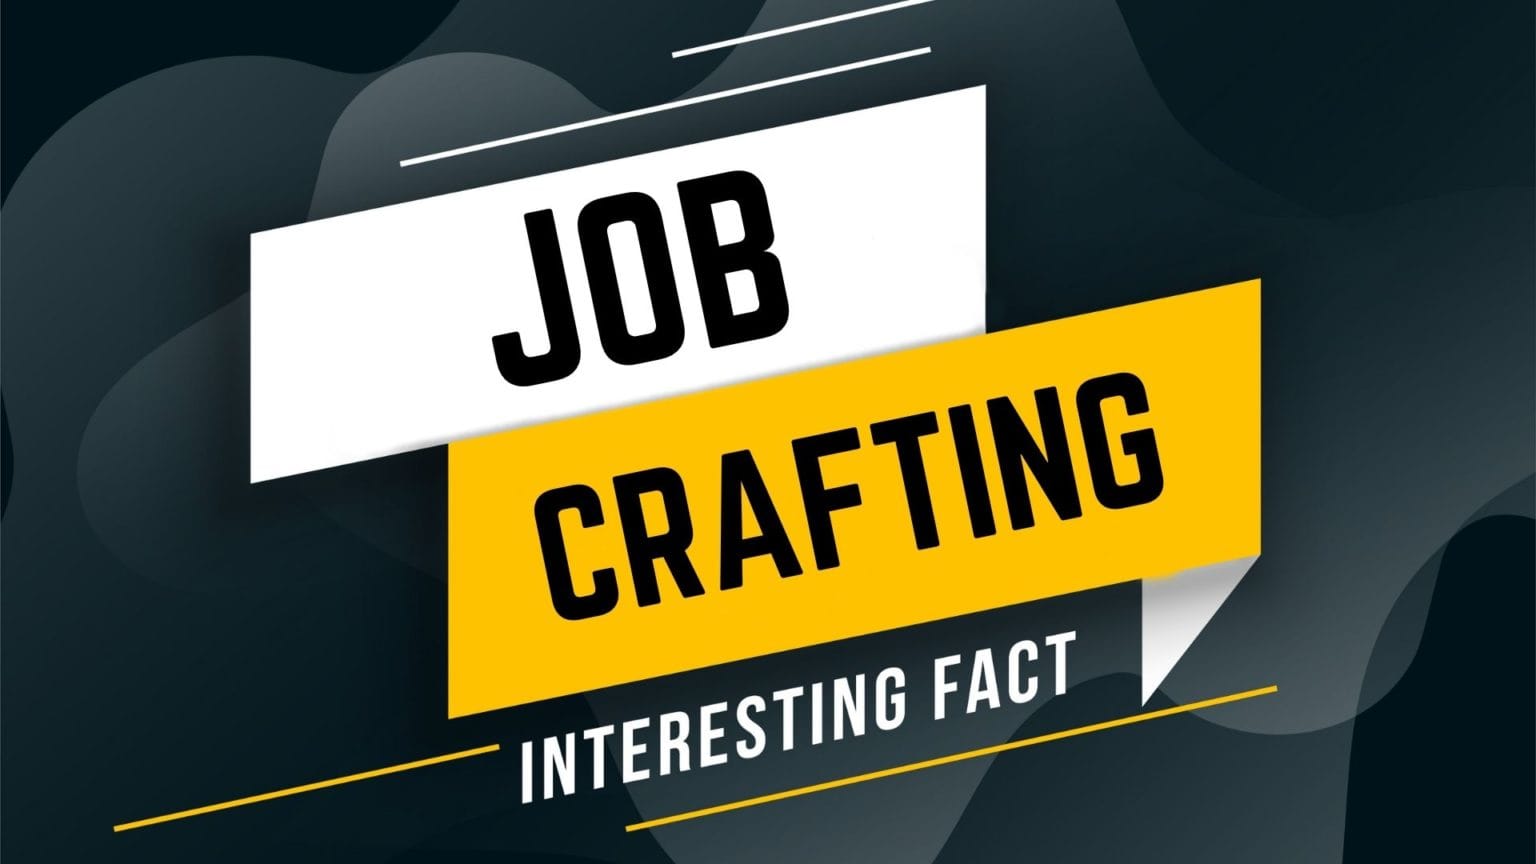 essay on job crafting